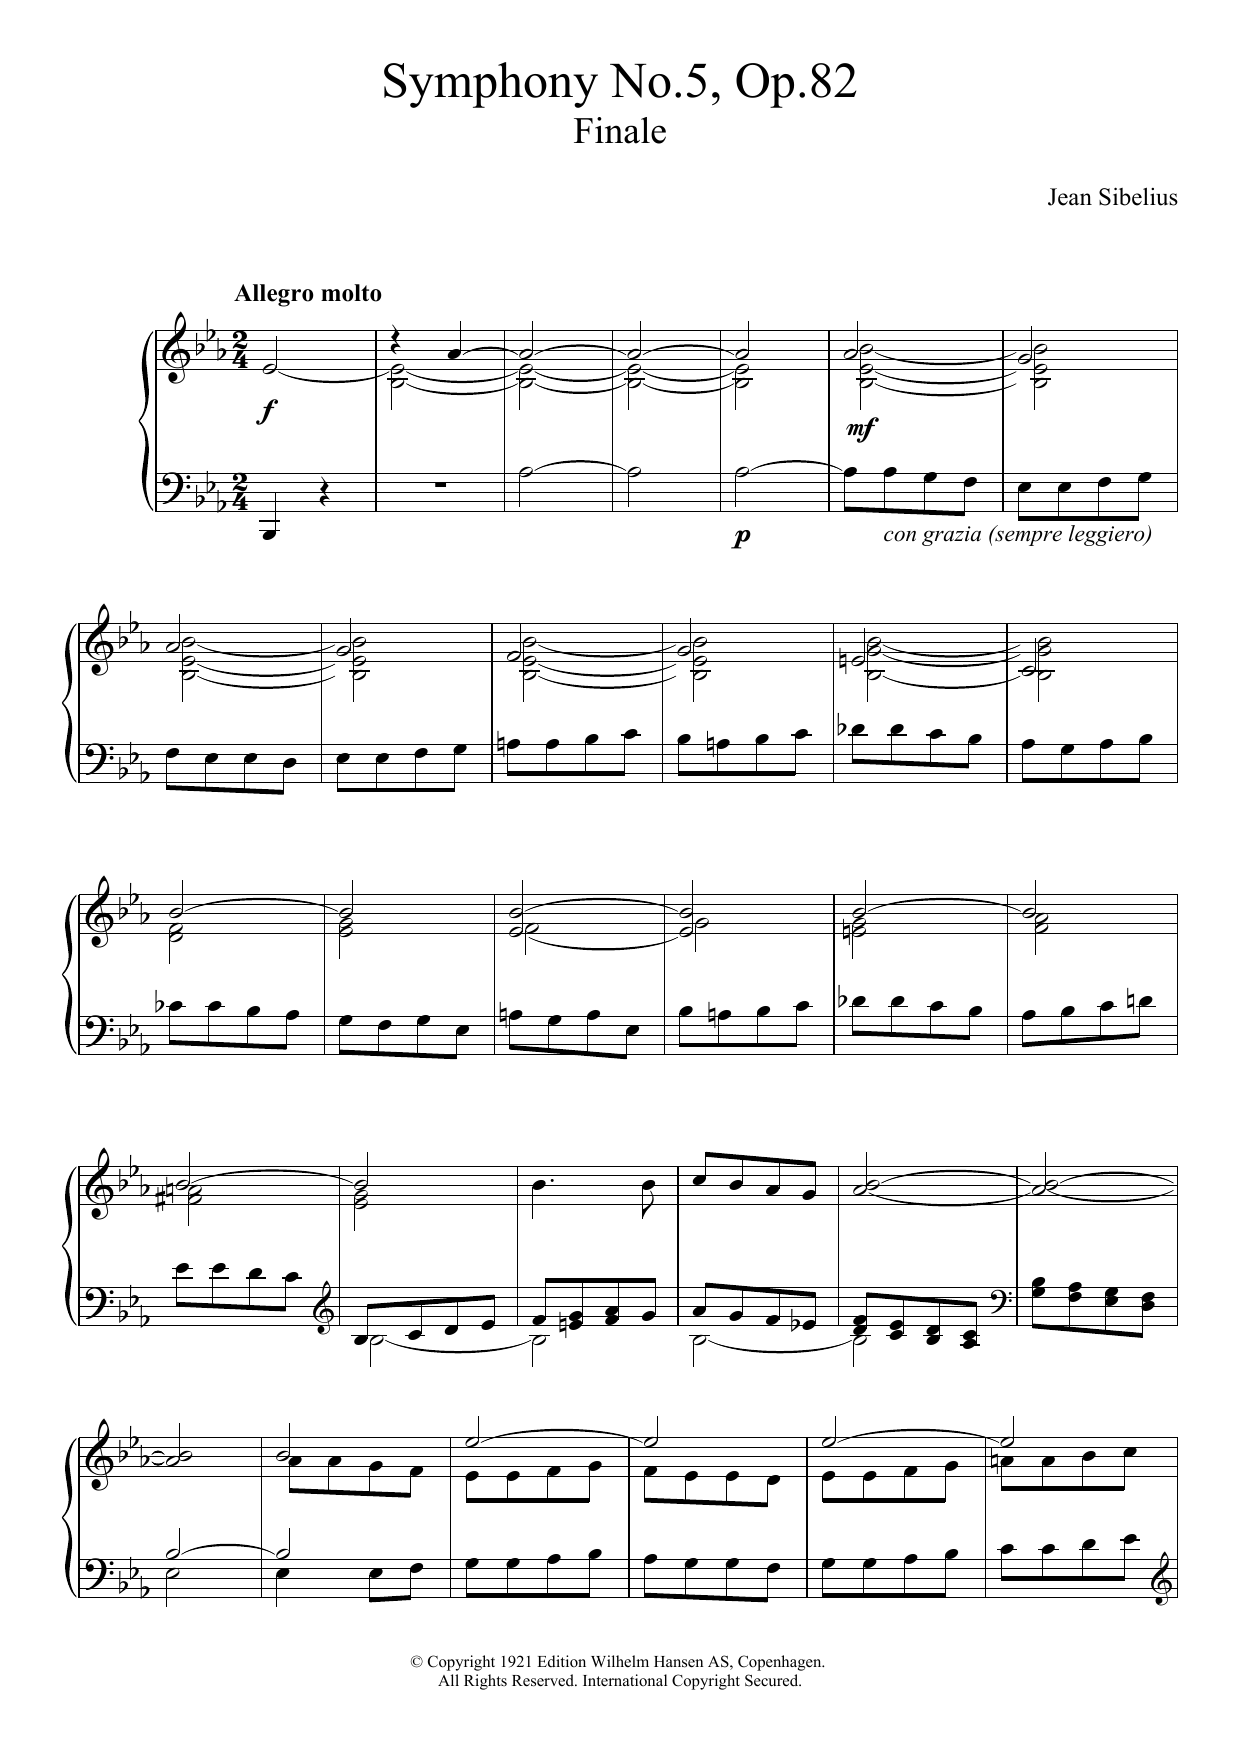 Download Jean Sibelius Symphony No.5, Op.82 (Finale) Sheet Music